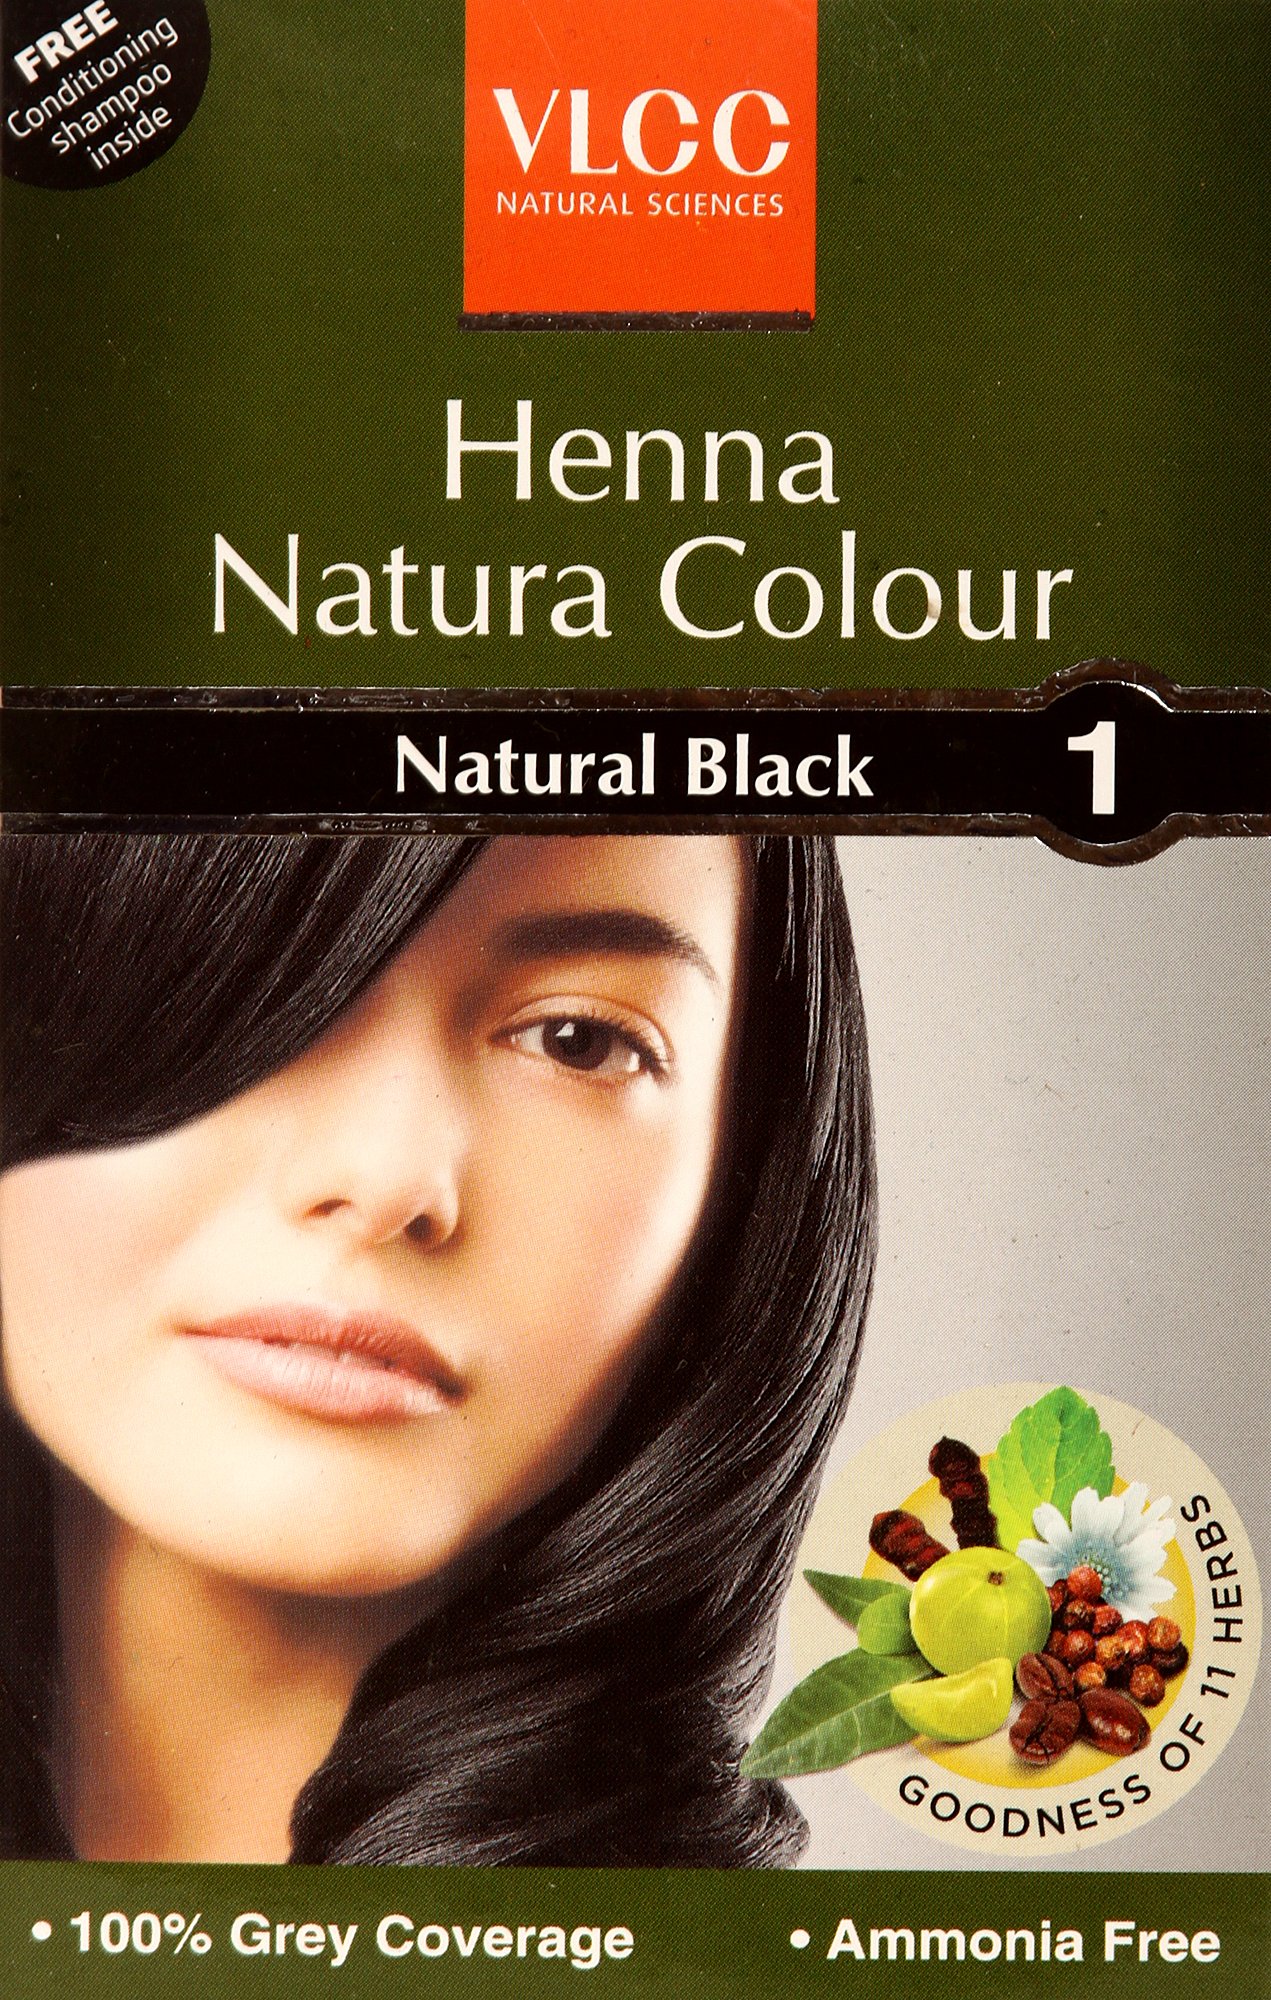 VLCC Henna Natura Colour-Natural Black - book cover